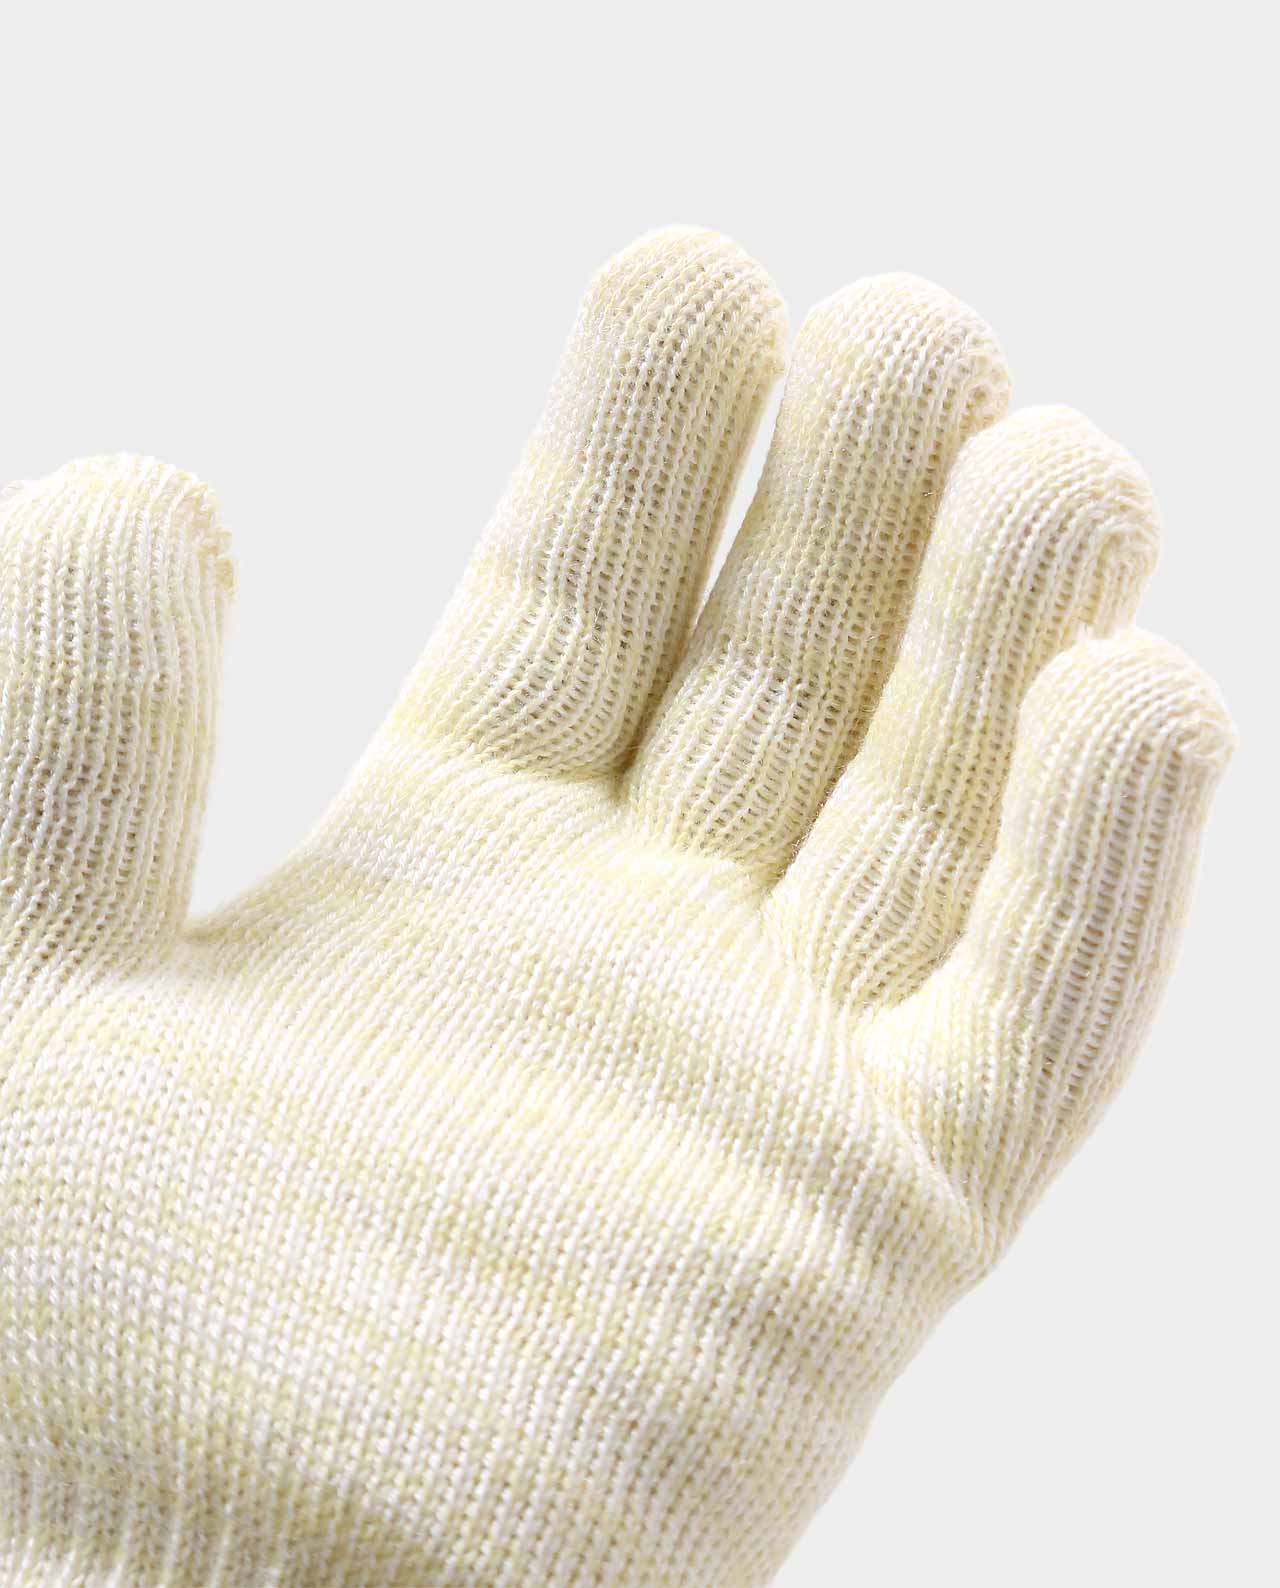 Breadtopia Oven Gloves (pair) – Mens – Breadtopia